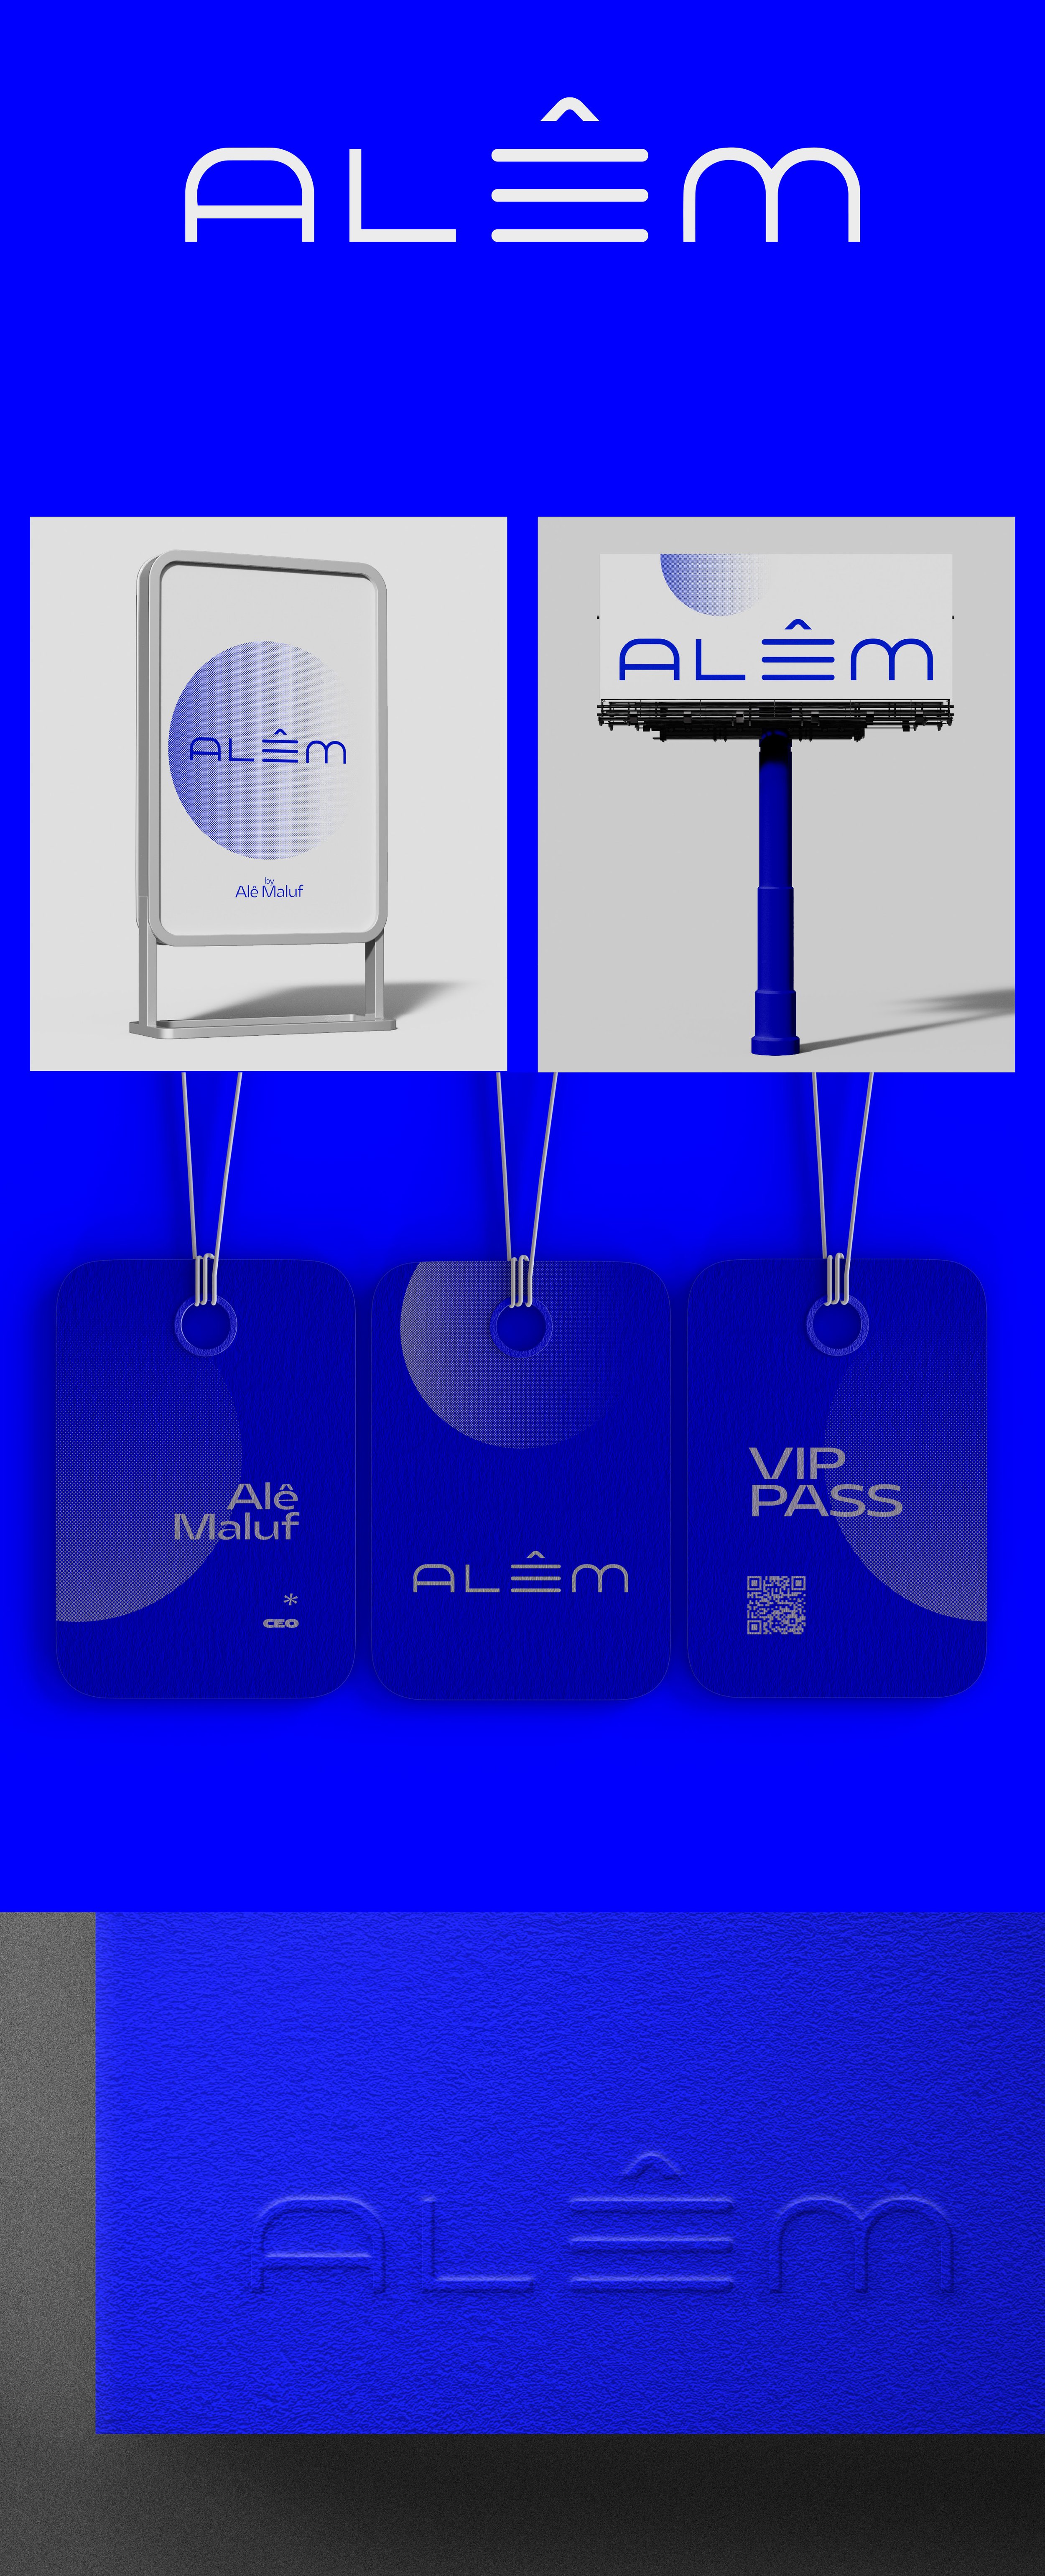 daniel-zito-alem-identidade-visual-logo-branding-3.jpg